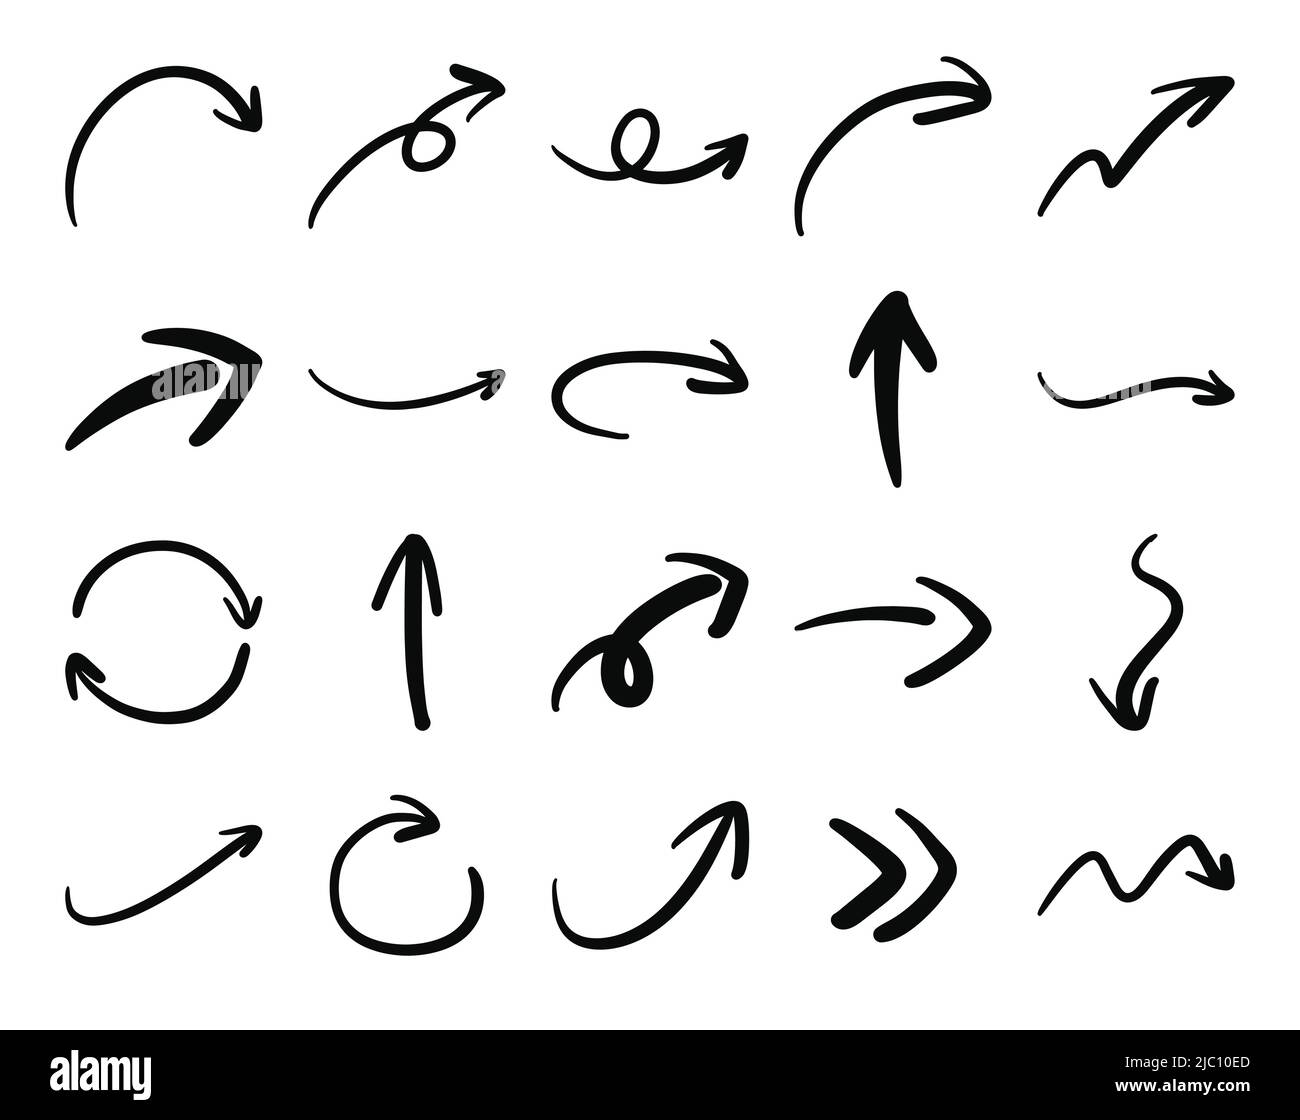 Hand drawn arrow icons set. Set of arrow doodle style. Stock Vector